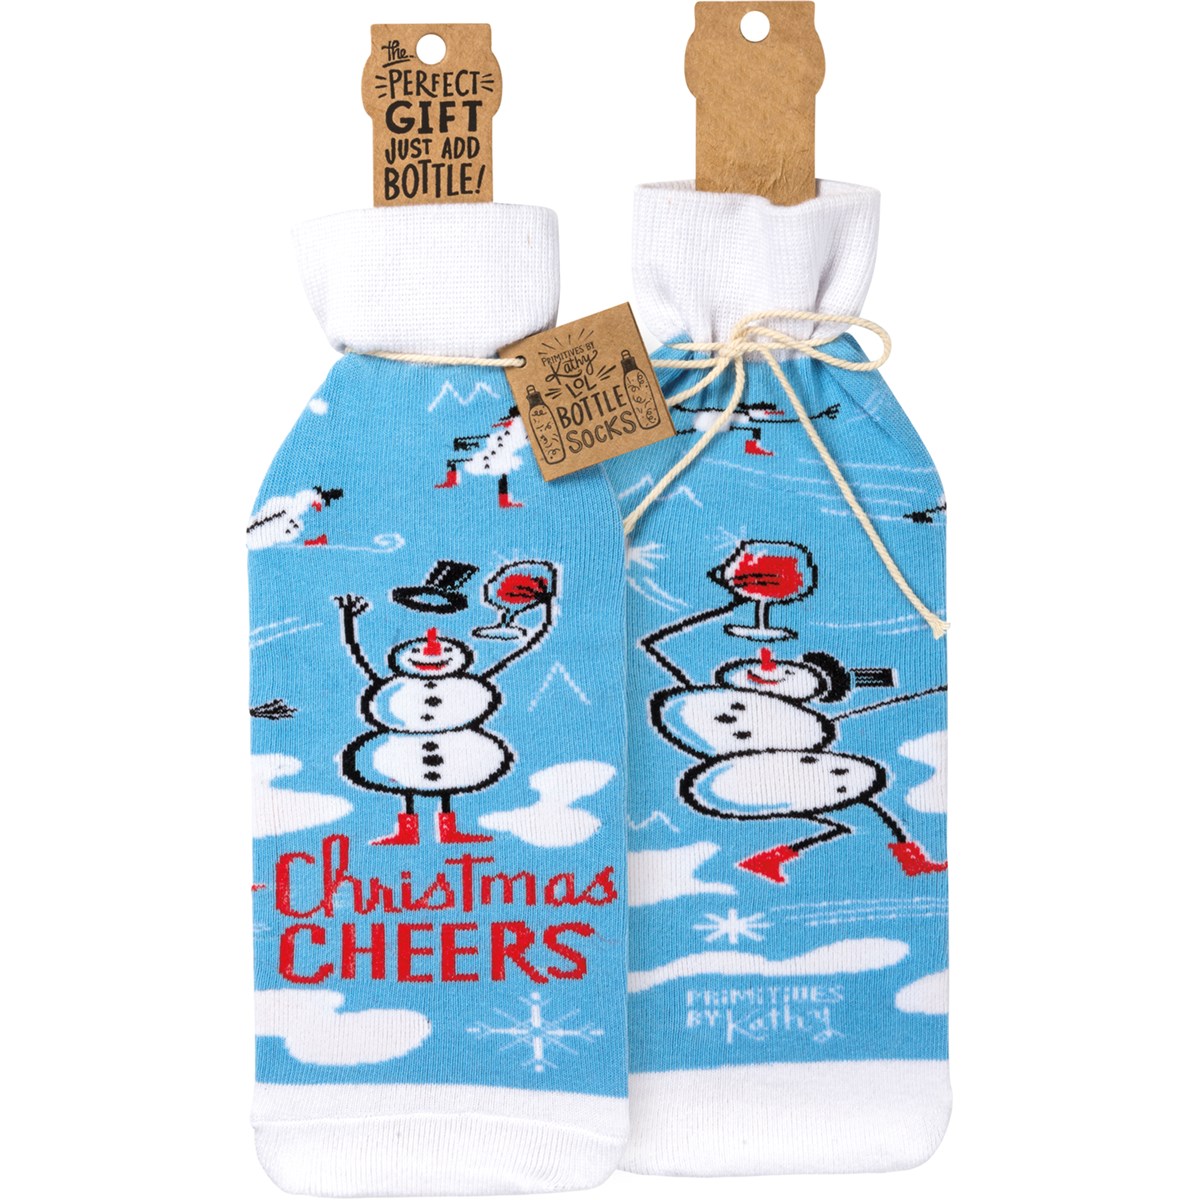 Christmas Cheers Bottle Sock - Cotton, Nylon, Spandex